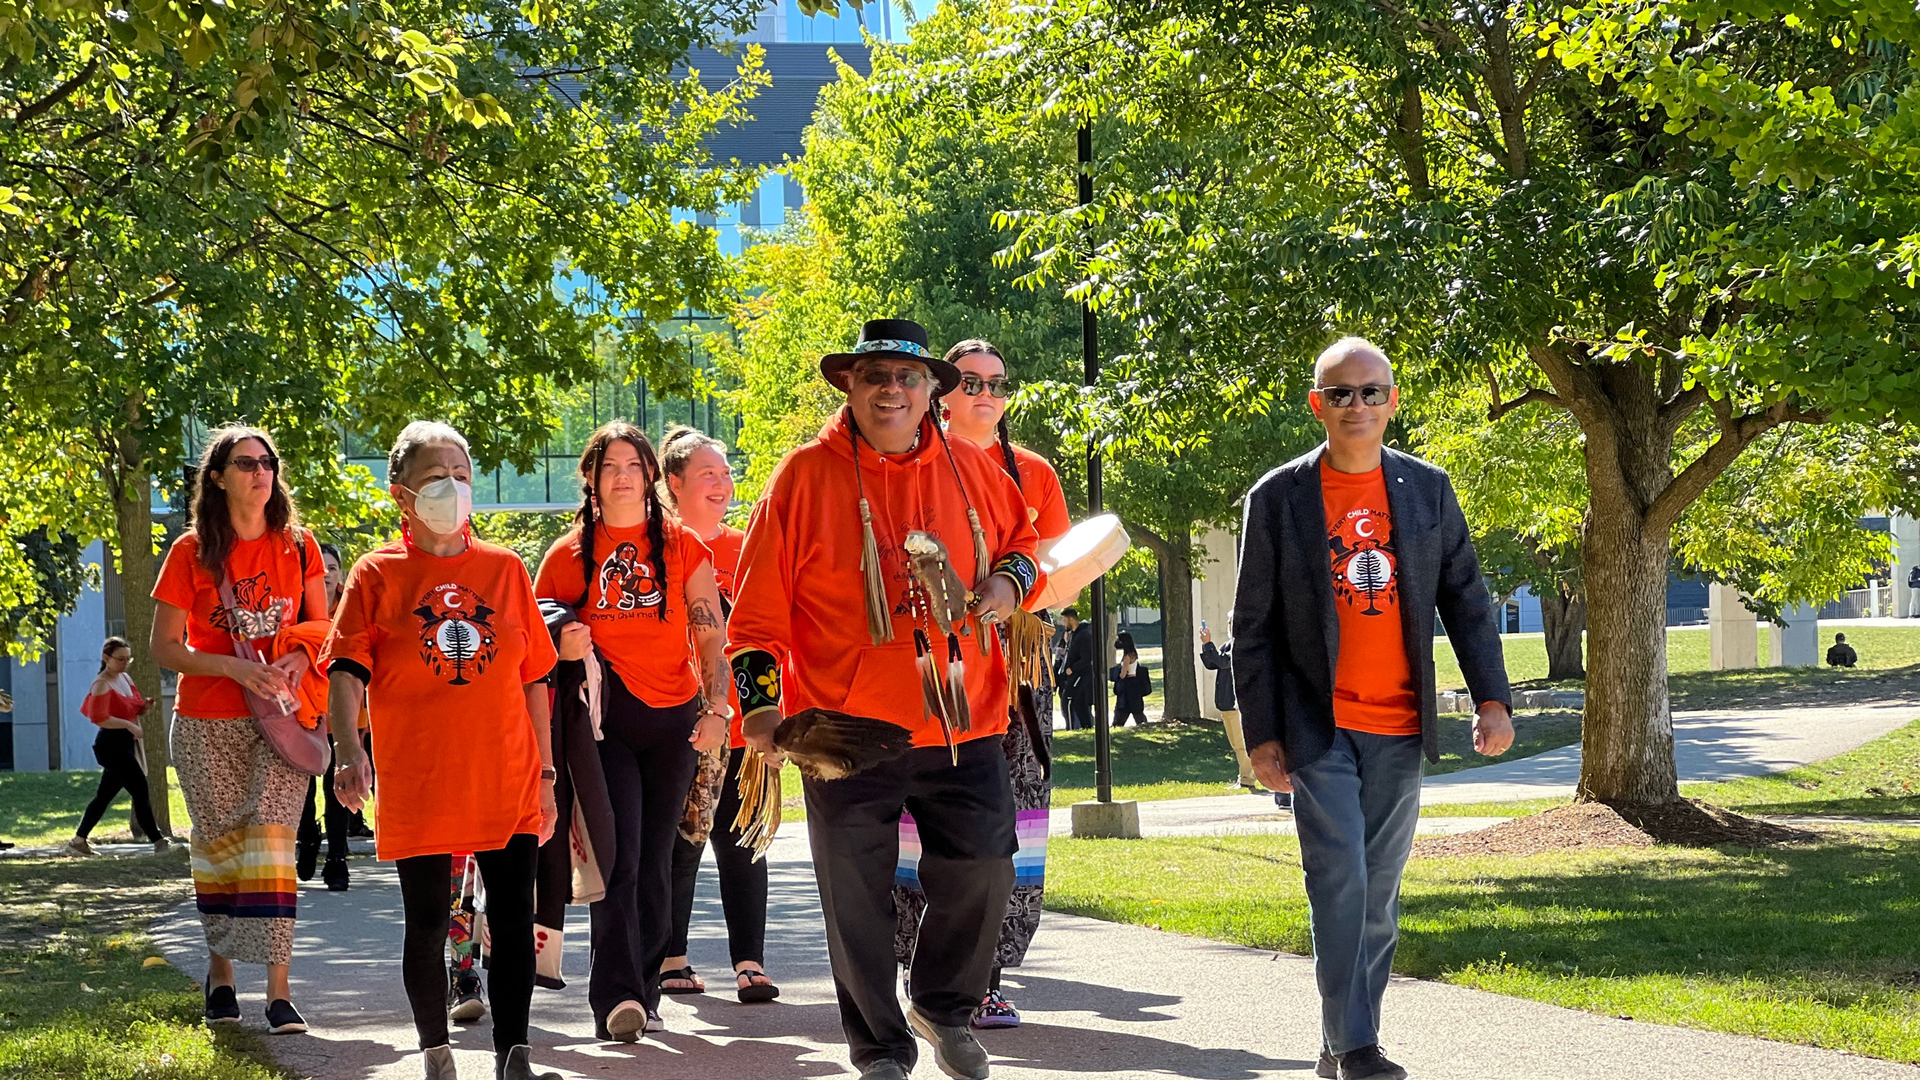 Elder Henry walking with Vivek Goel and others wearing orange shirts